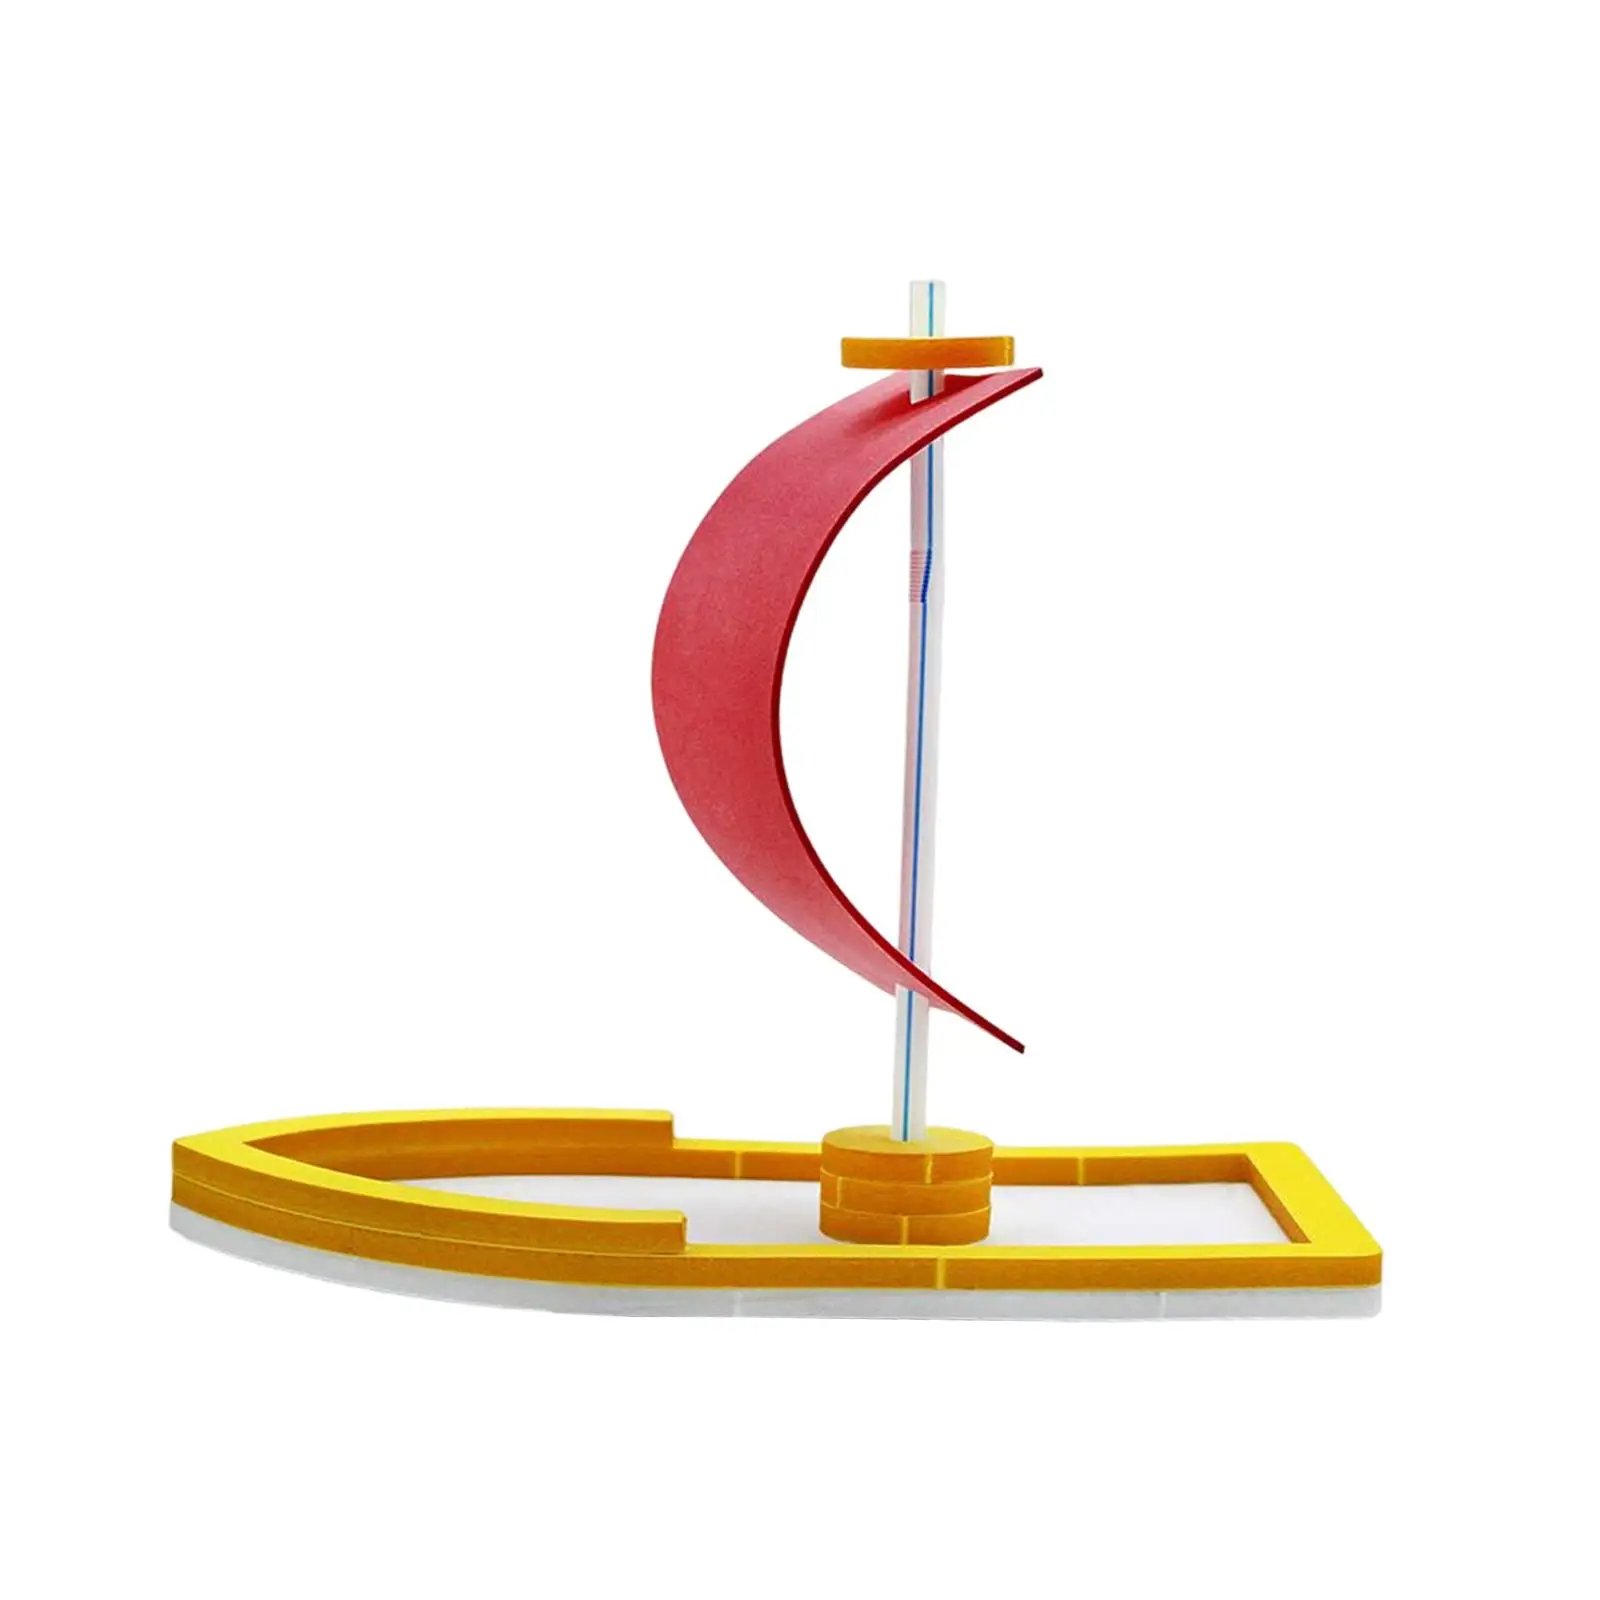 Creative 3D Sailing Ship Puzzle, Scientific Building Toy, Physics Novelty ,Stem